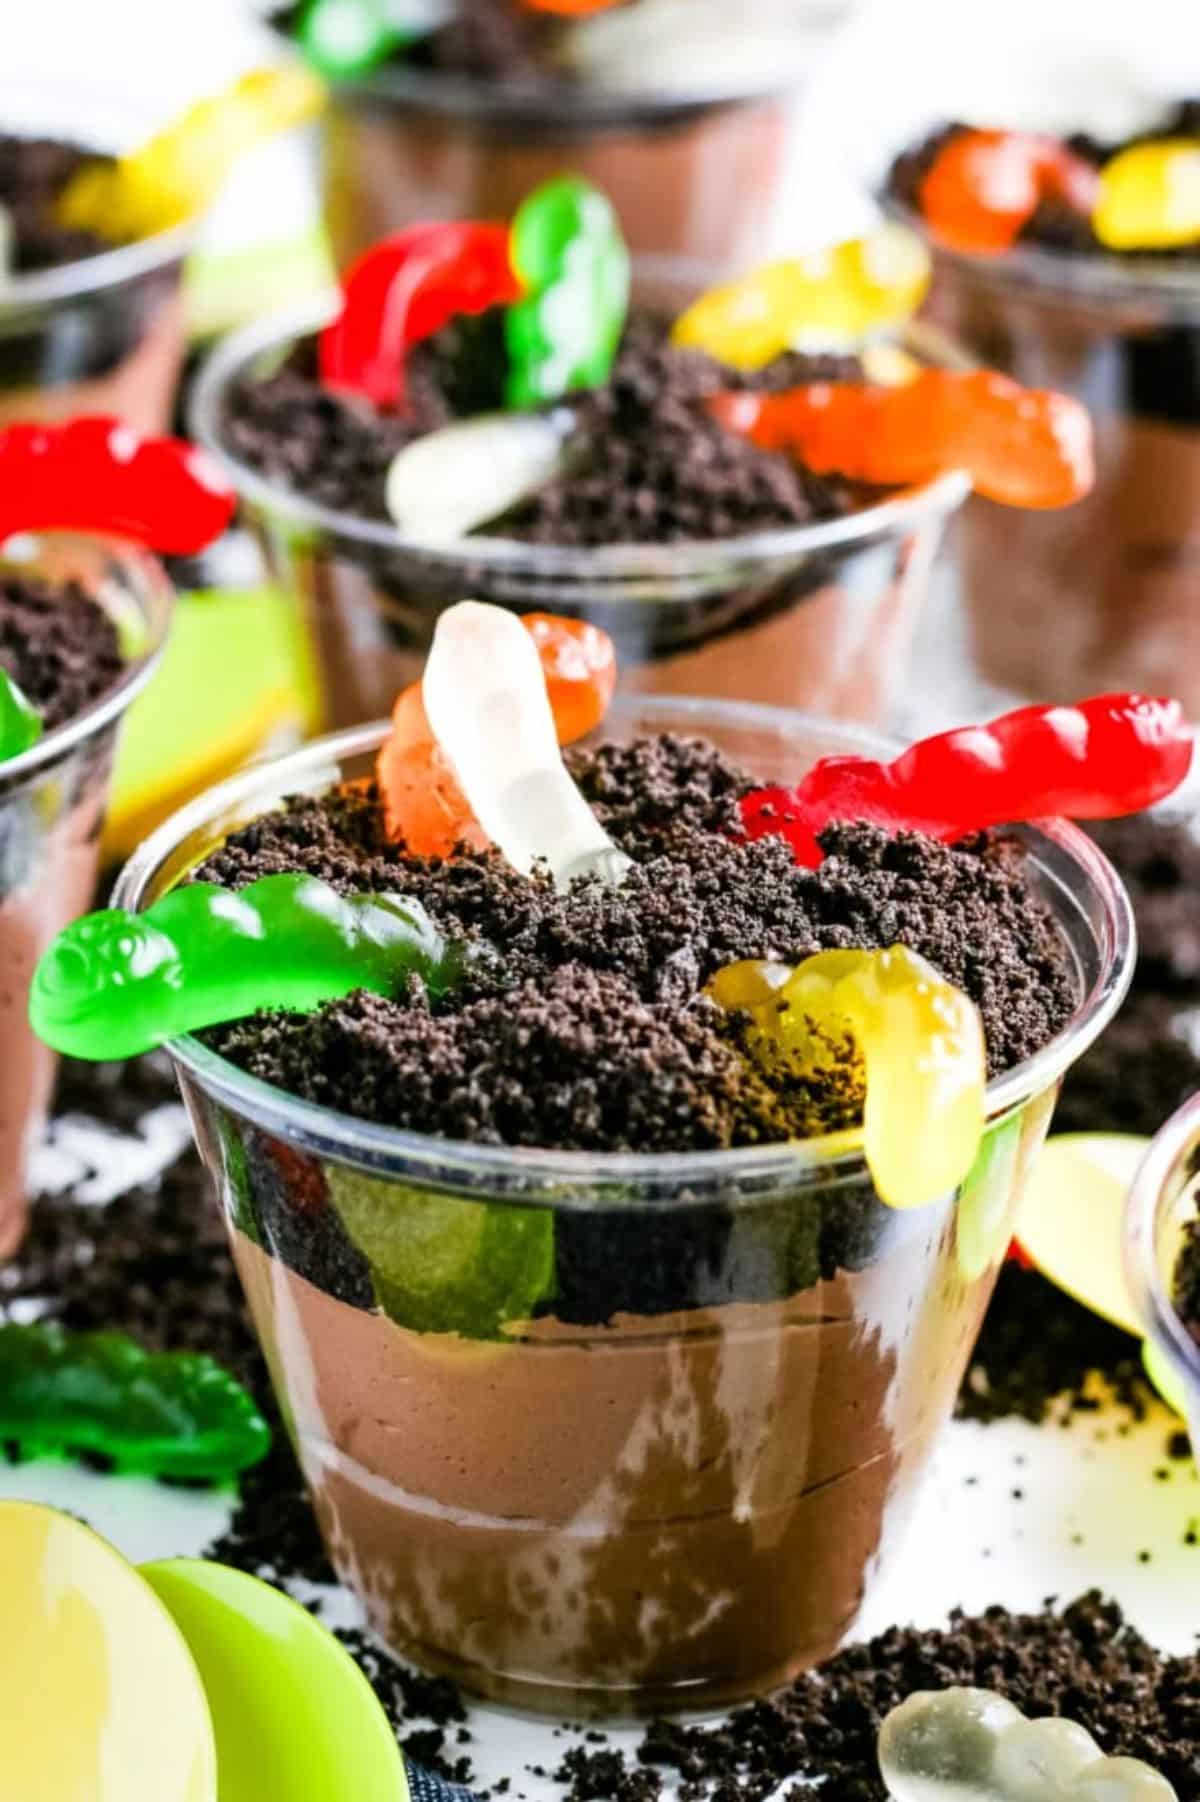 Scrumptious dirt puddings in plastic cups.